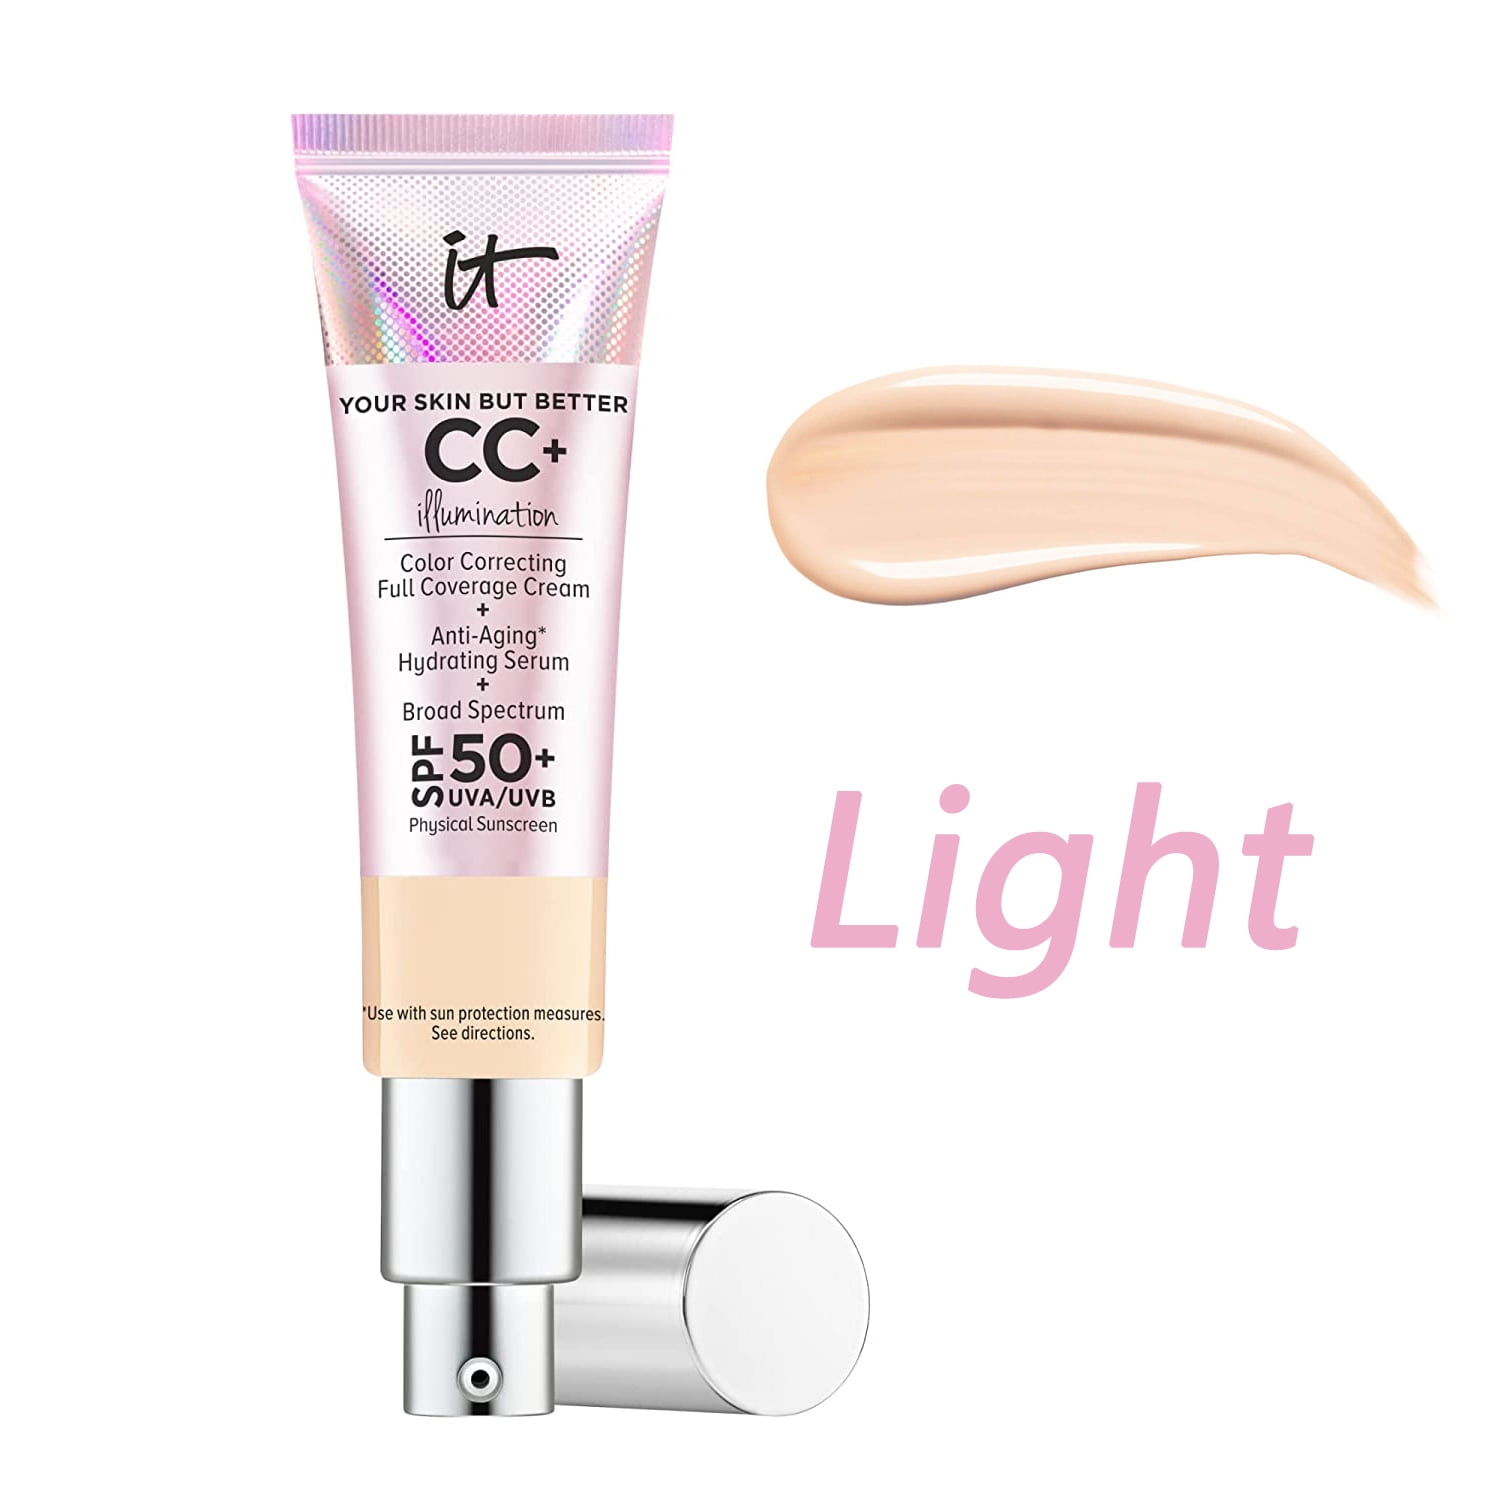 It Cosmetics Your Skin But Better CC+ Cream Illumination Full